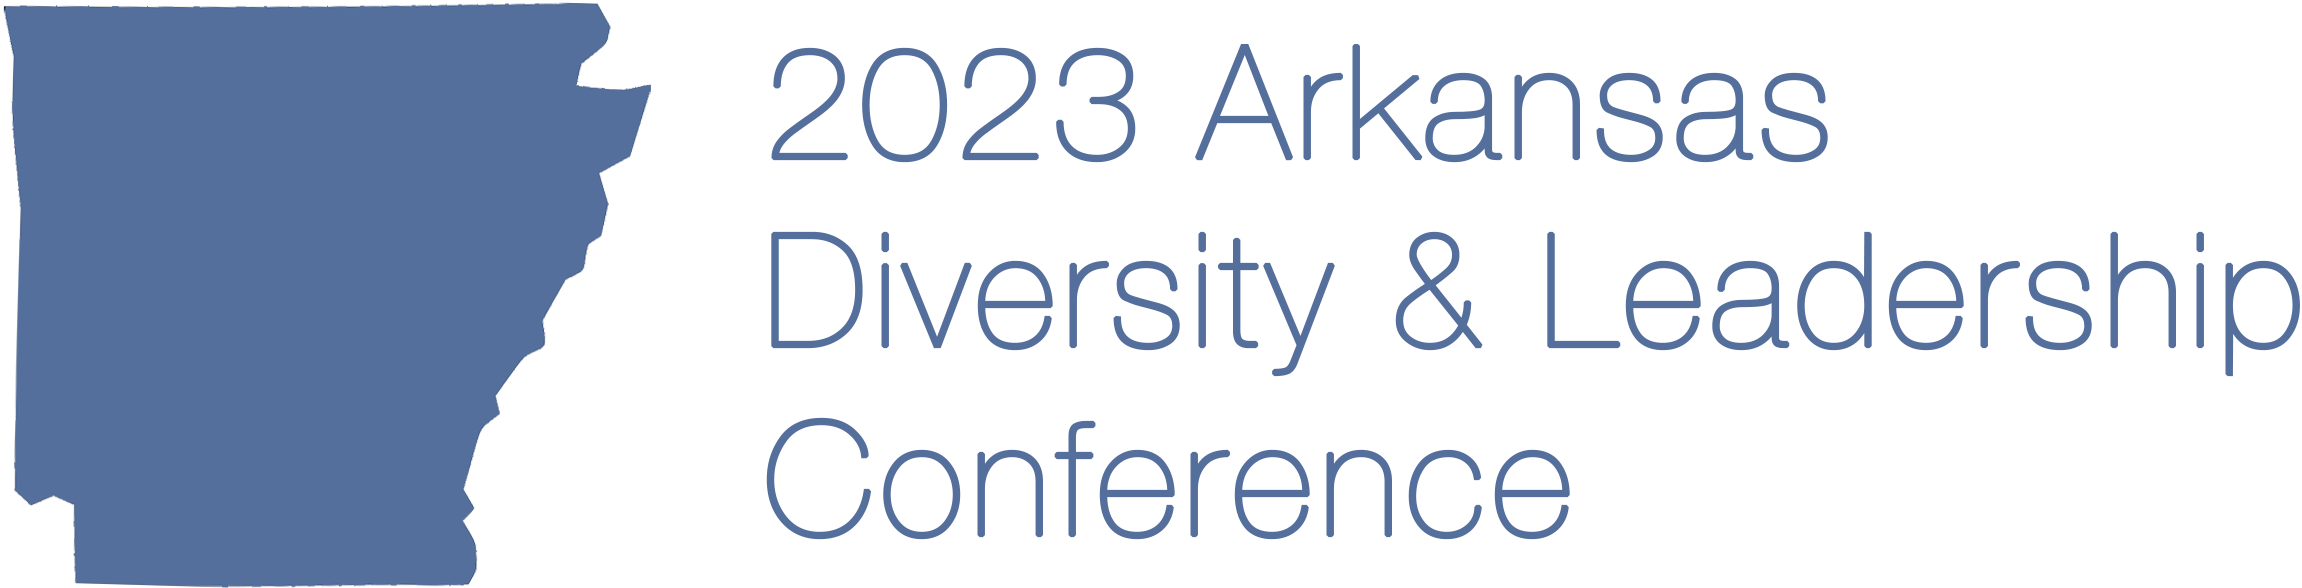 2023 Arkansas Diversity & Leadership Conference